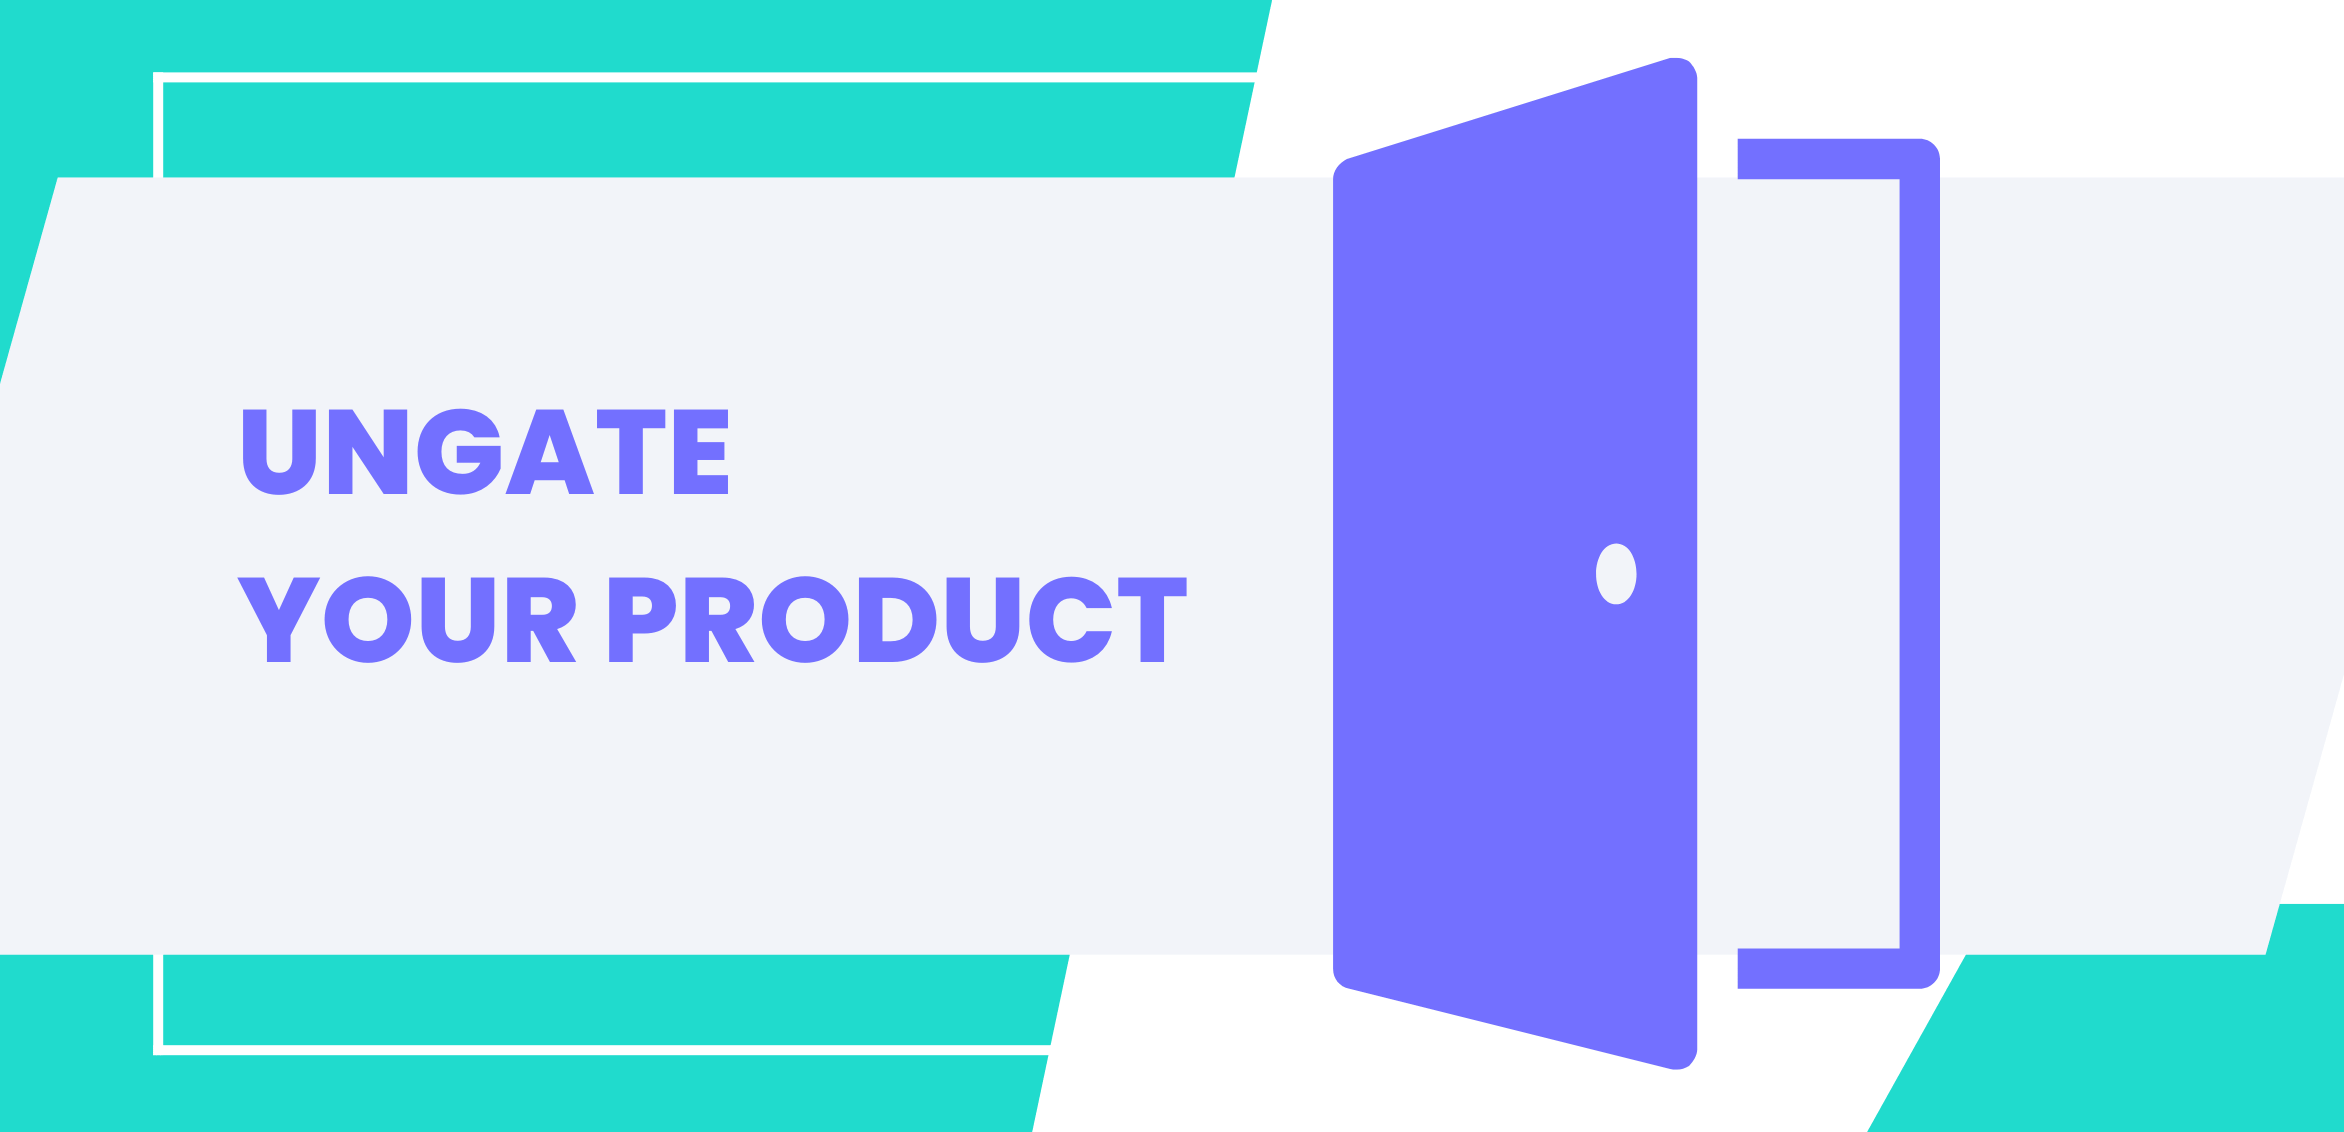 Ungate your product